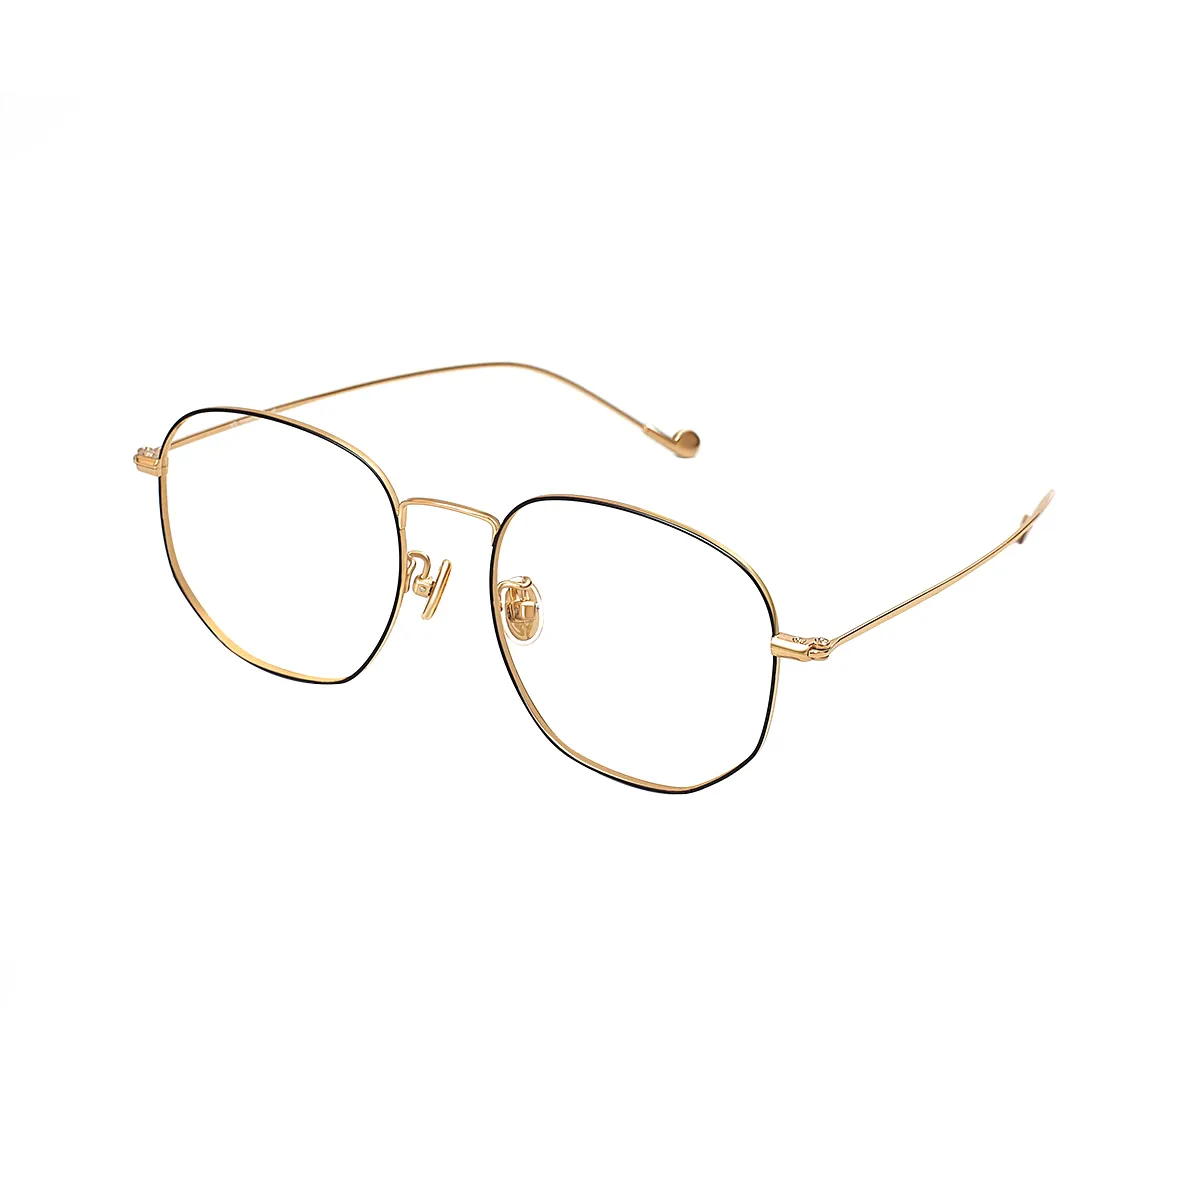 Rosanna - Square Black-Gold Glasses for Women